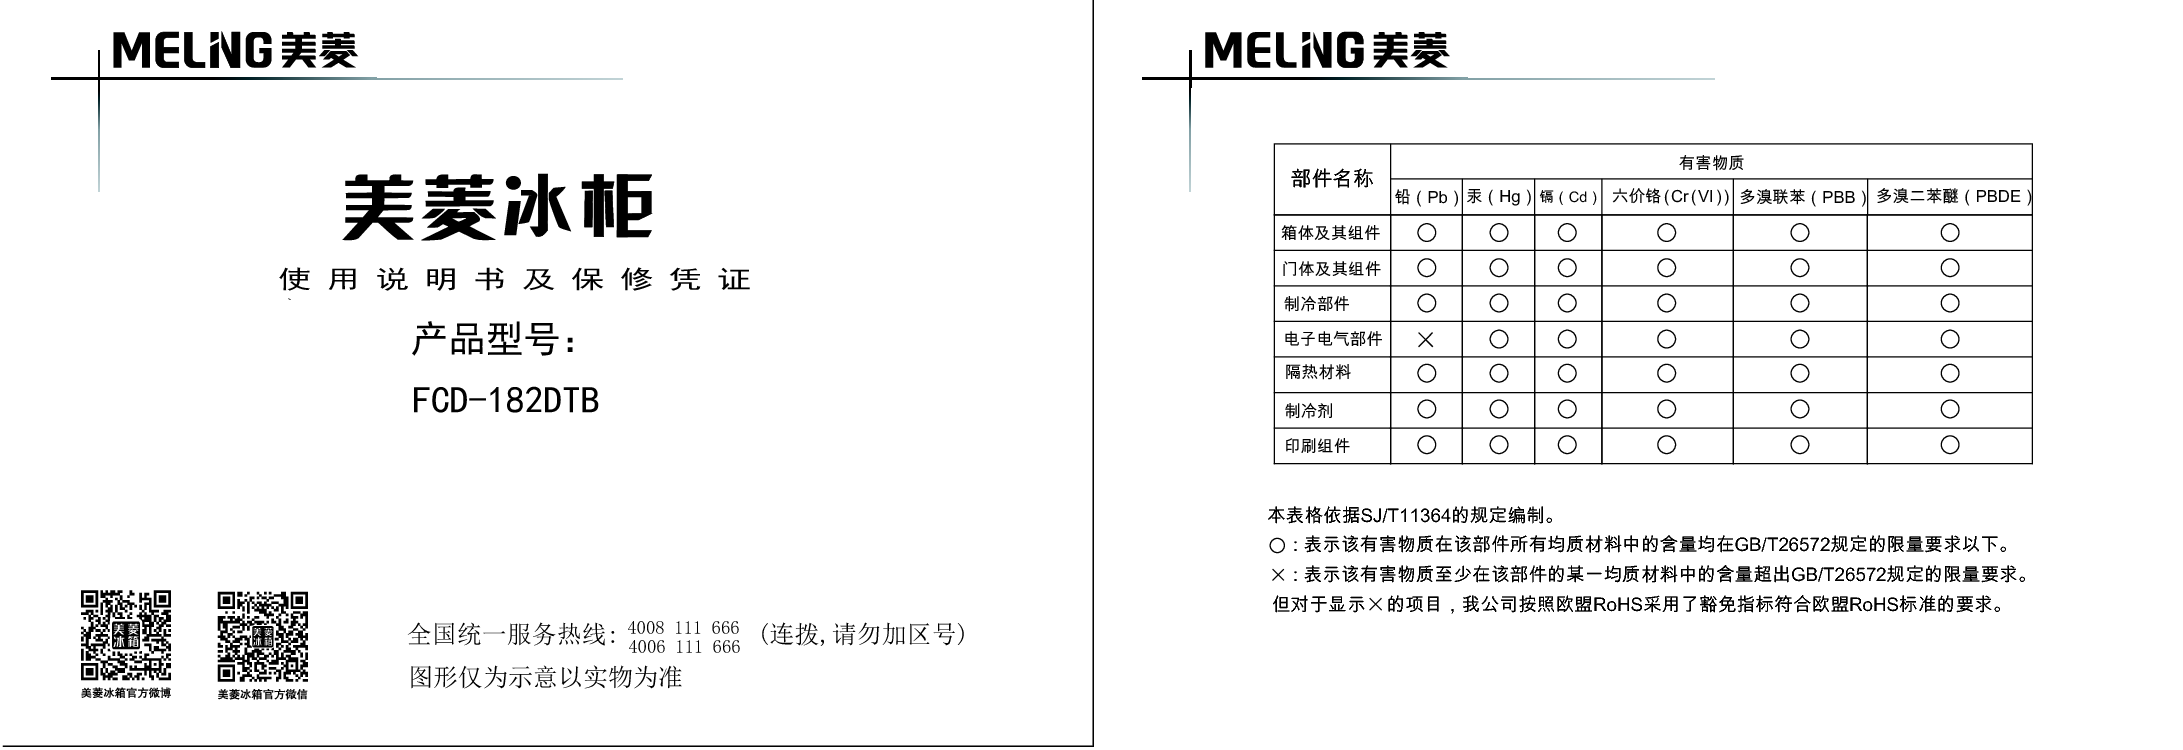 美菱 Meiling FCD-182DTB 使用说明书 封面